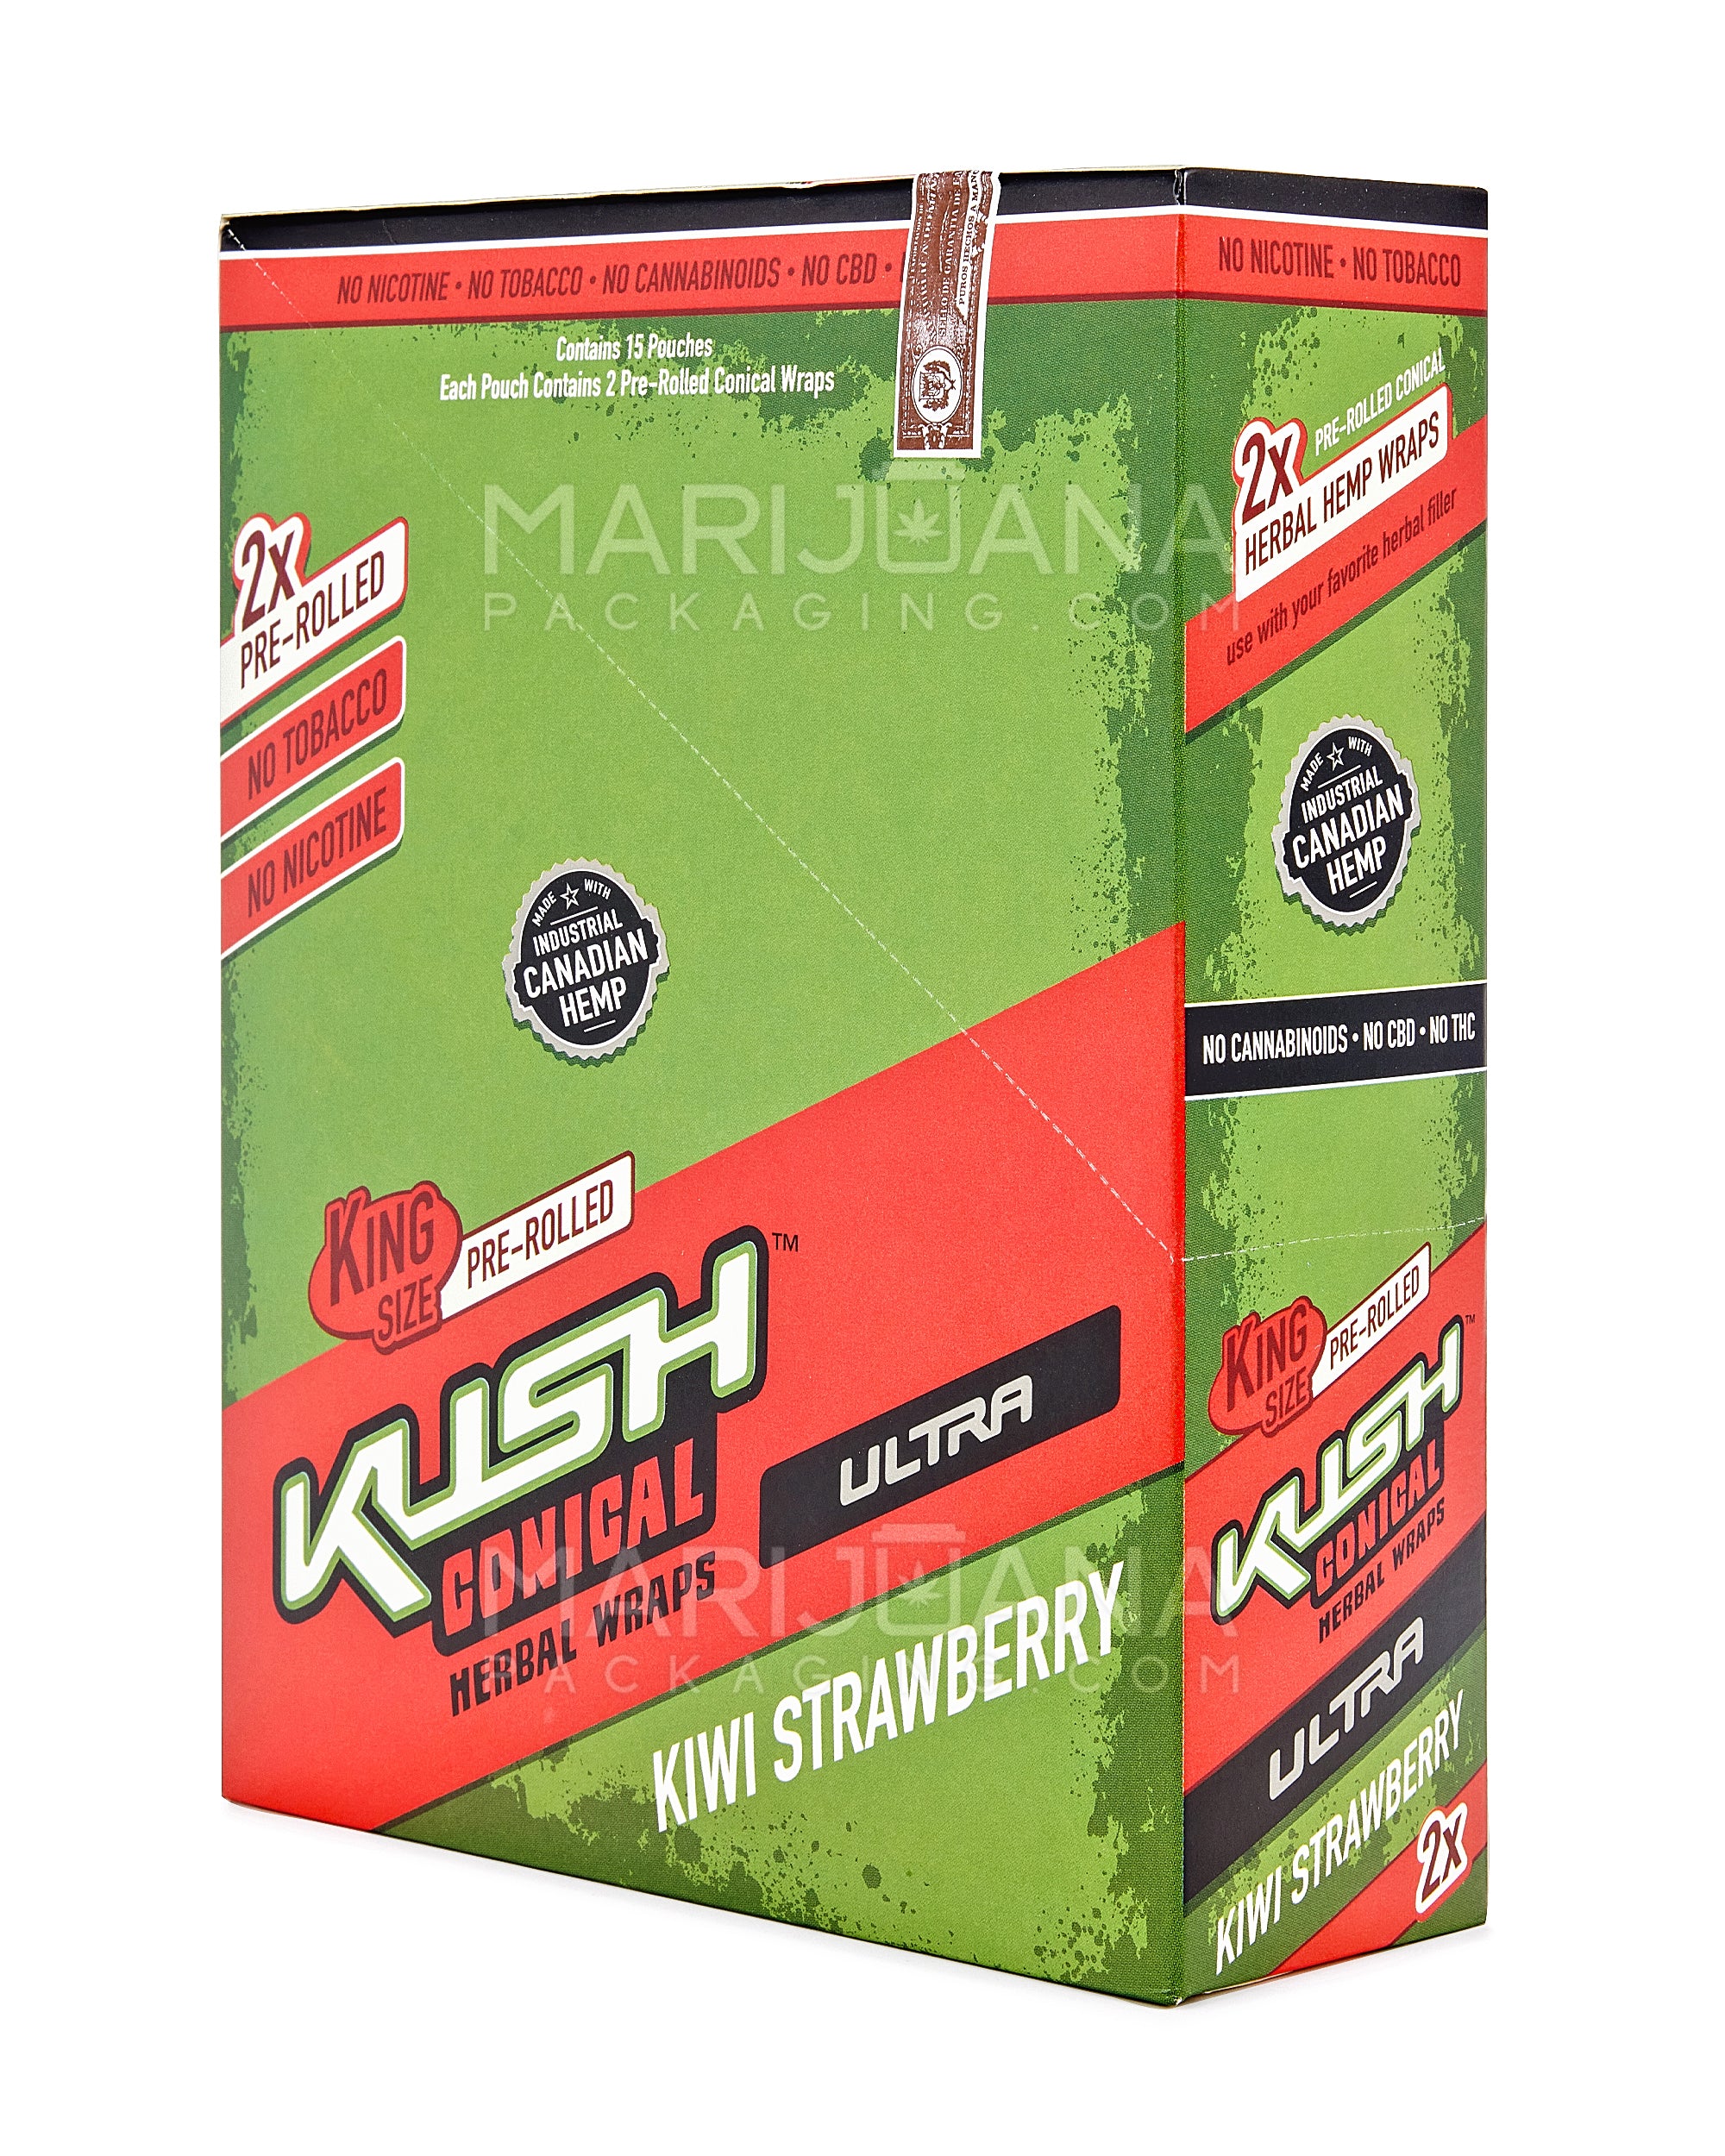 KUSH | 'Retail Display' Ultra Herbal Hemp Conical Wraps | 157mm - Kiwi Strawberry - 15 Count - 4